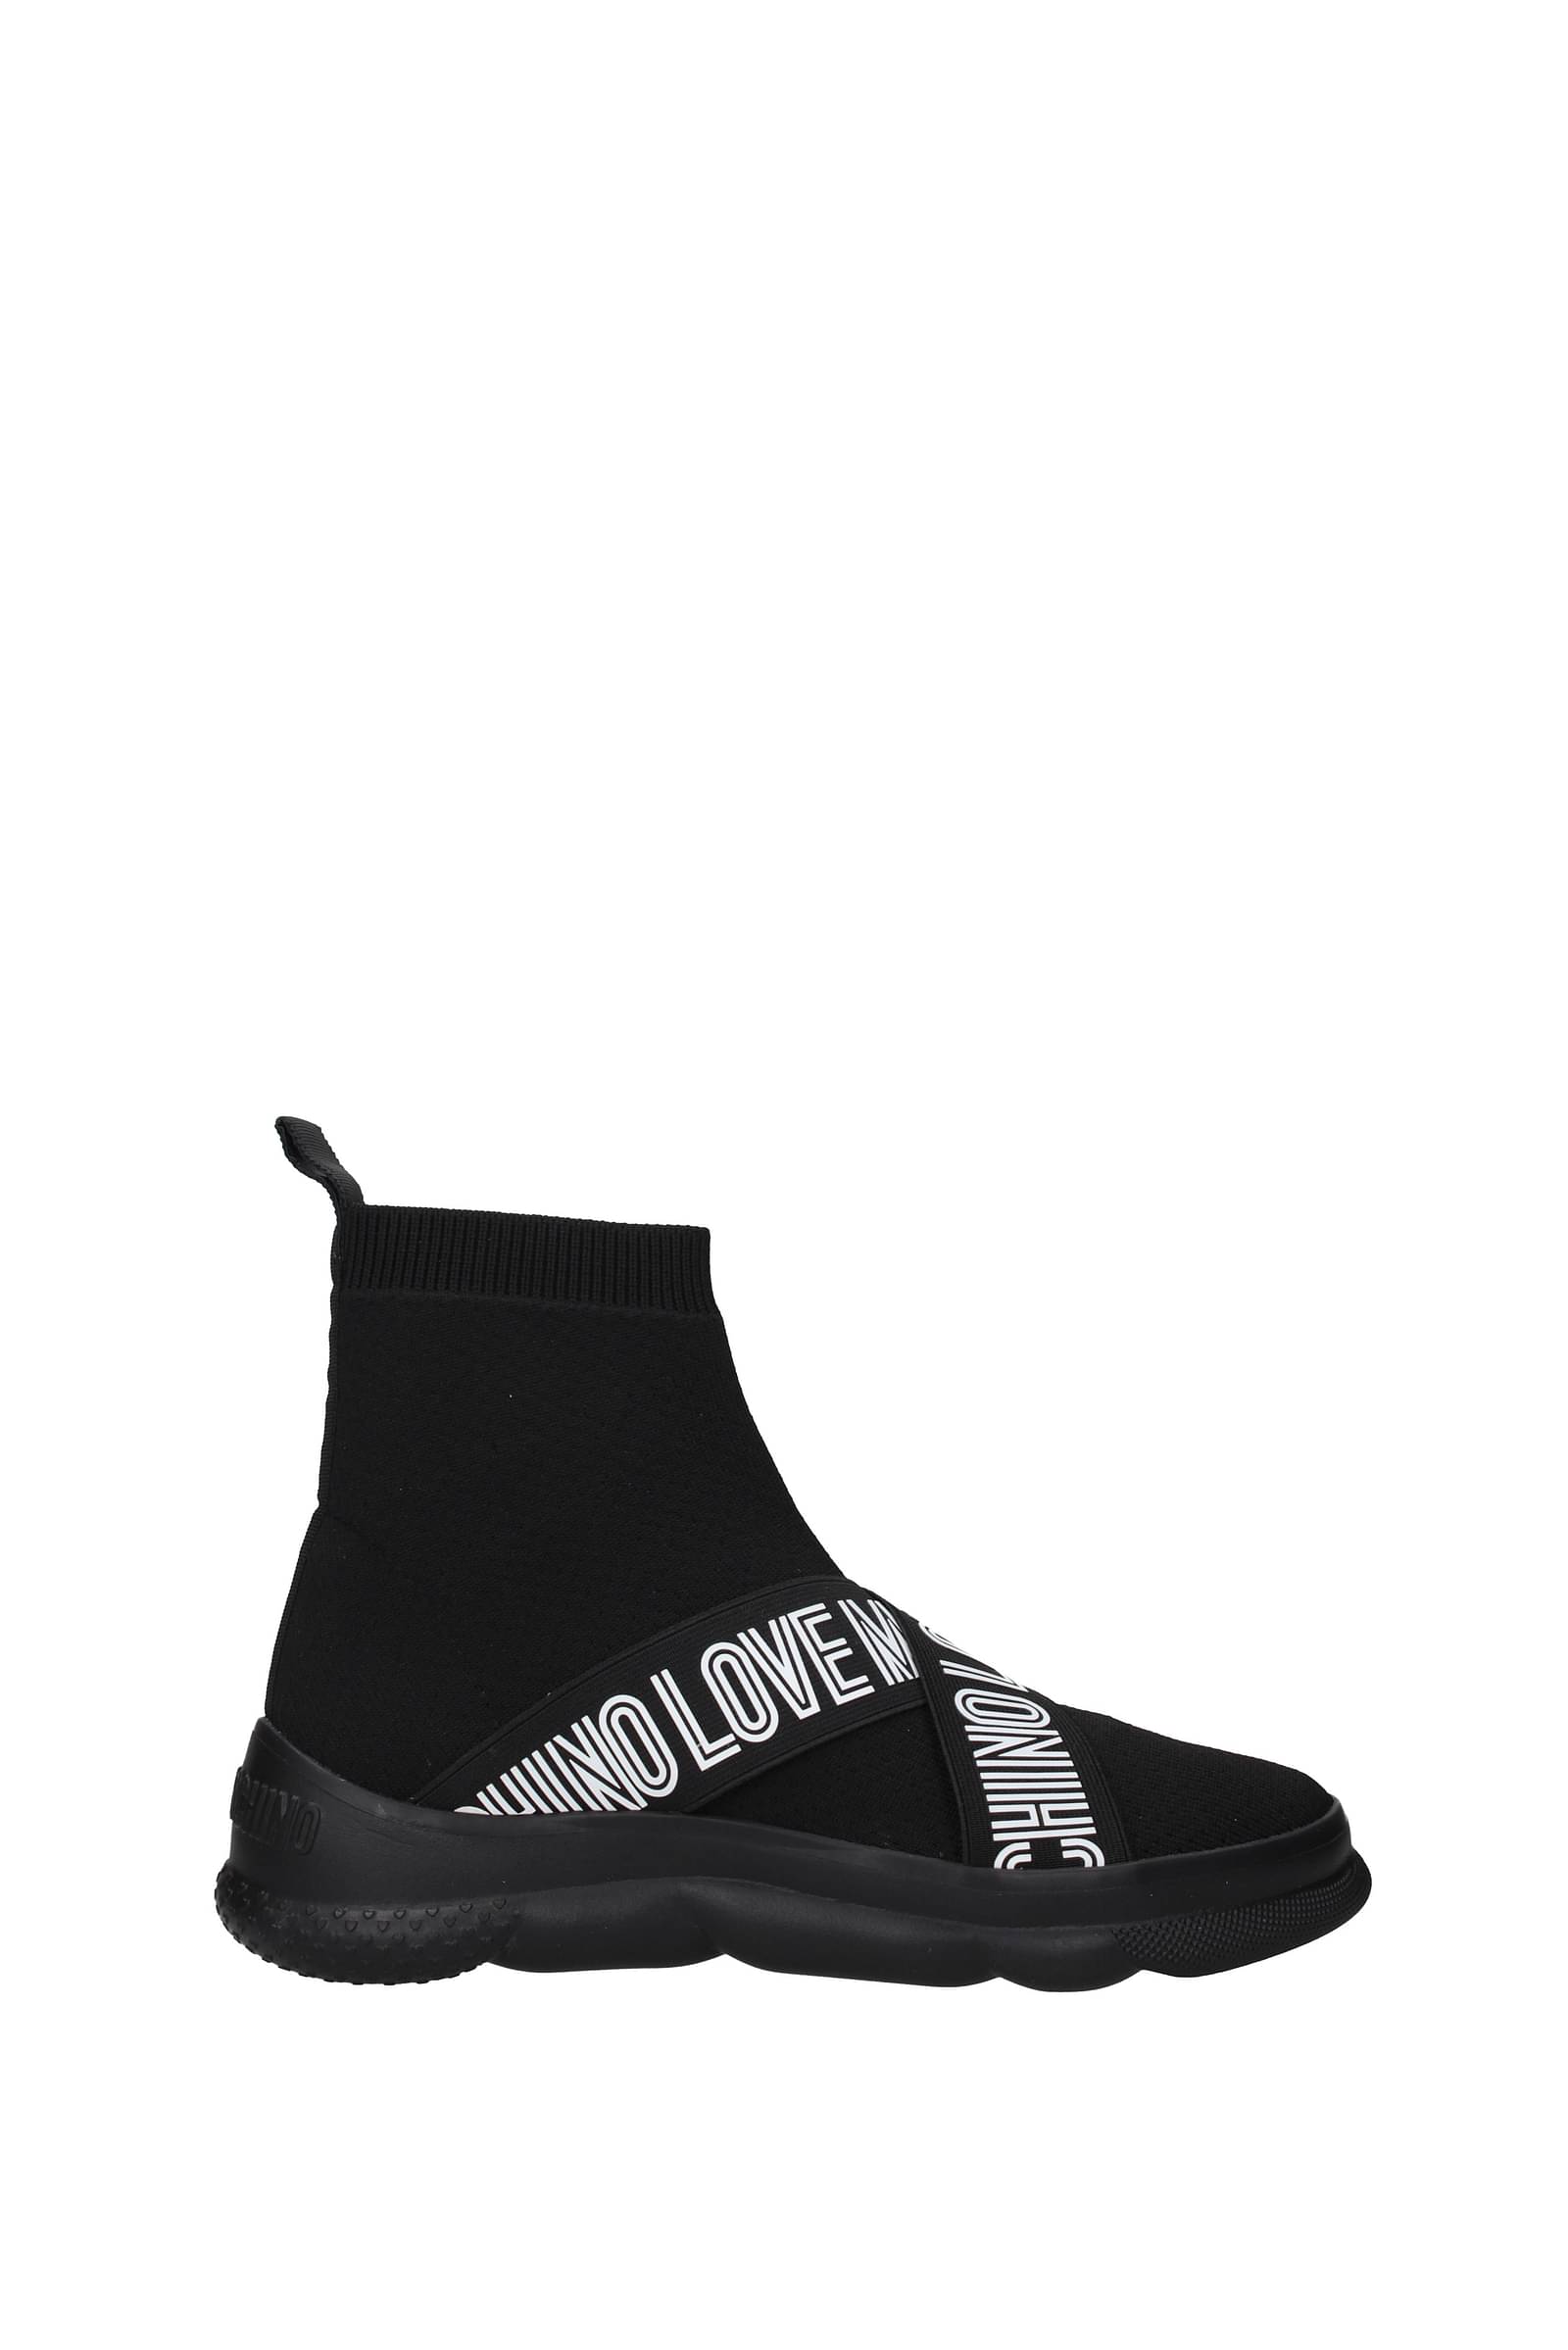 Love Moschino Sneakers Women JA15224G0FIZG00A Fabric 175,5€